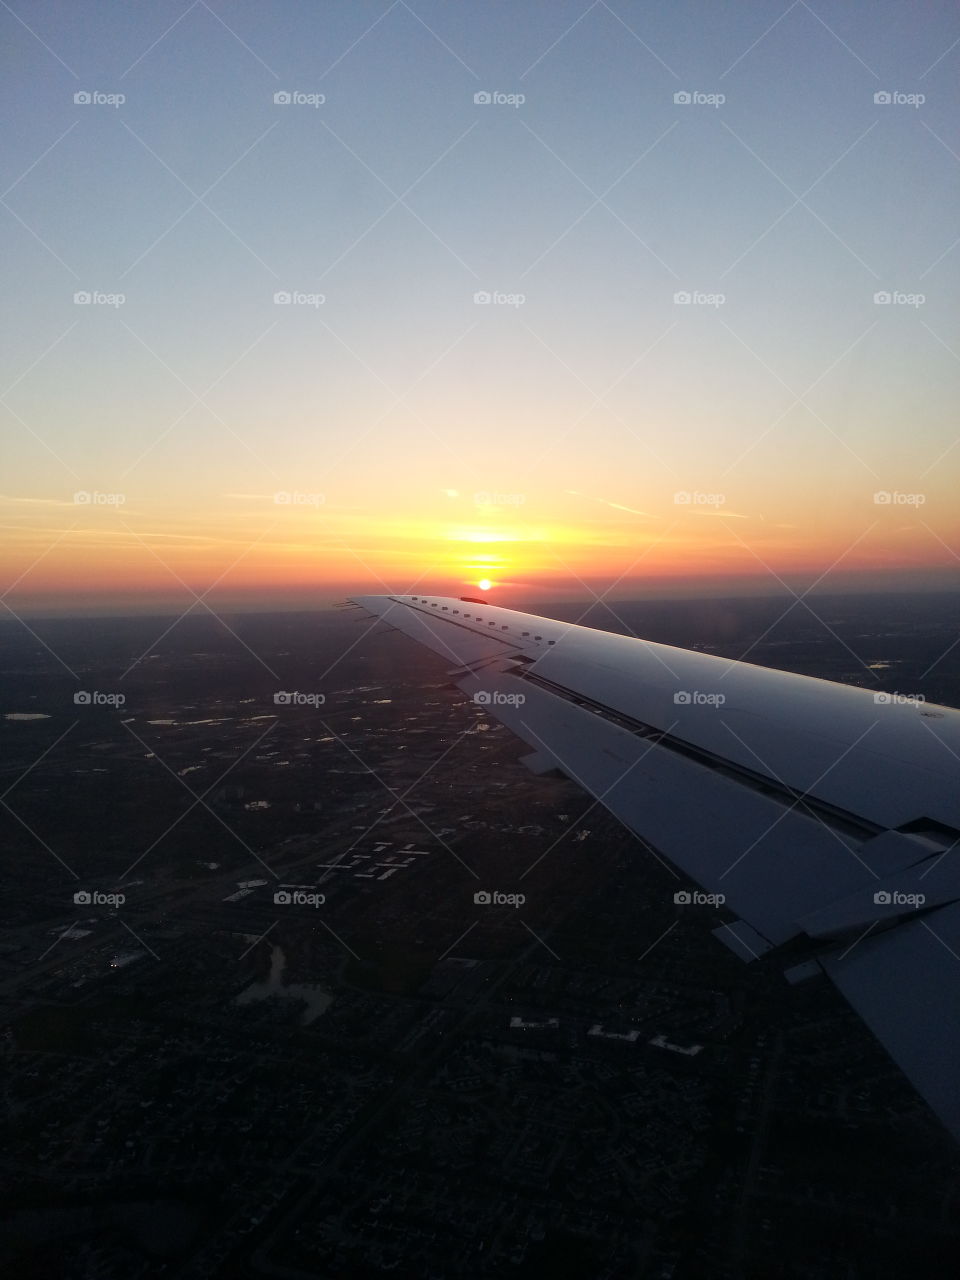 sunset on a plane